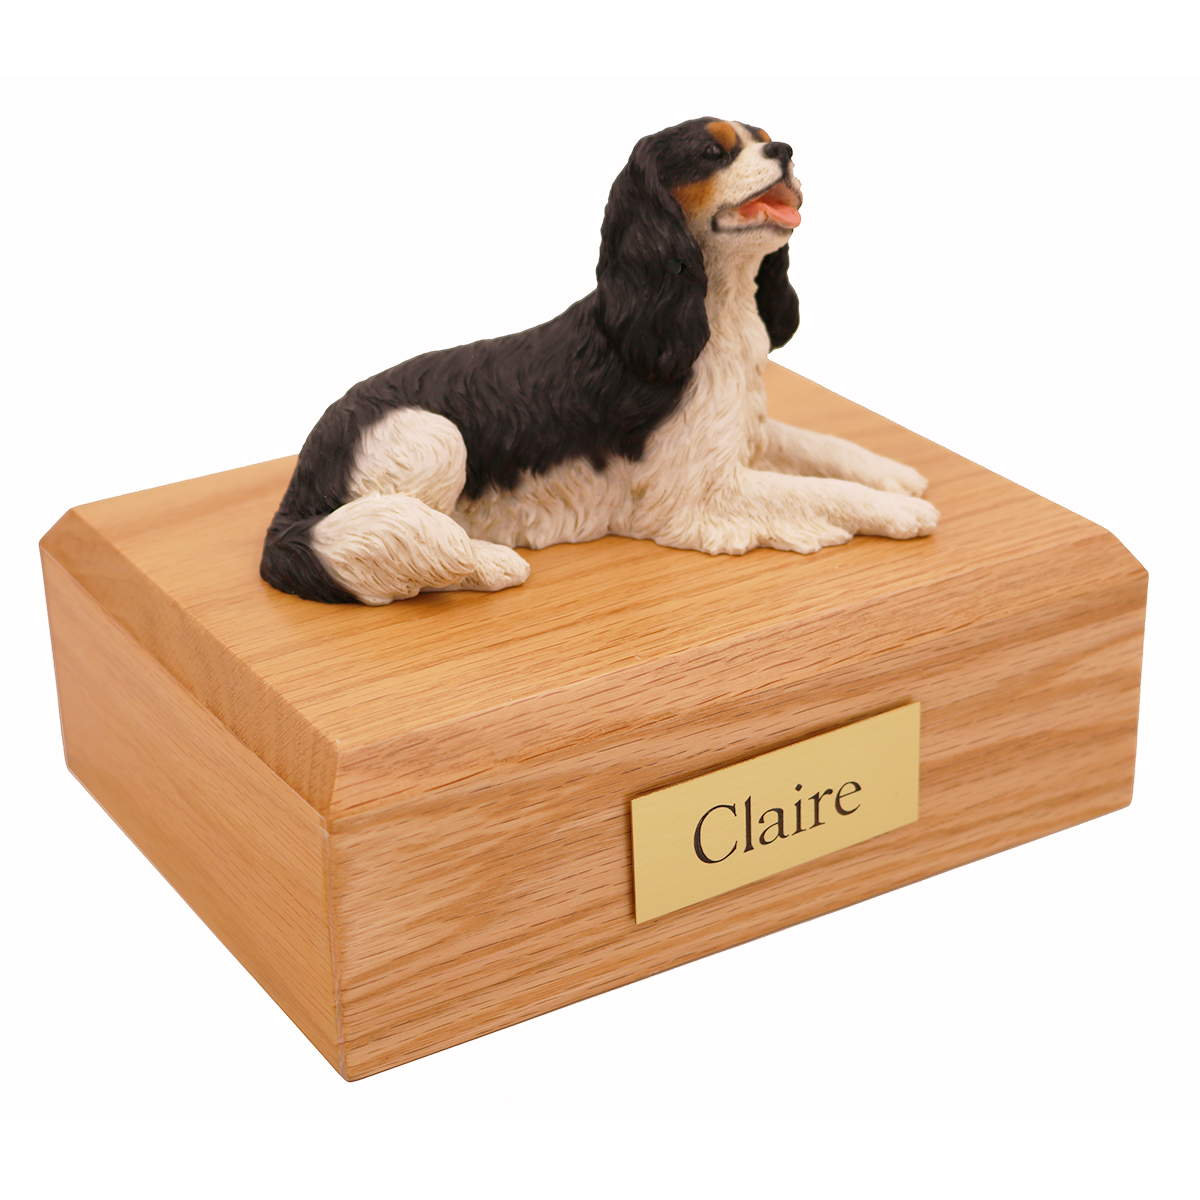 Dog, King Charles Spaniel, Black - Figurine Urn